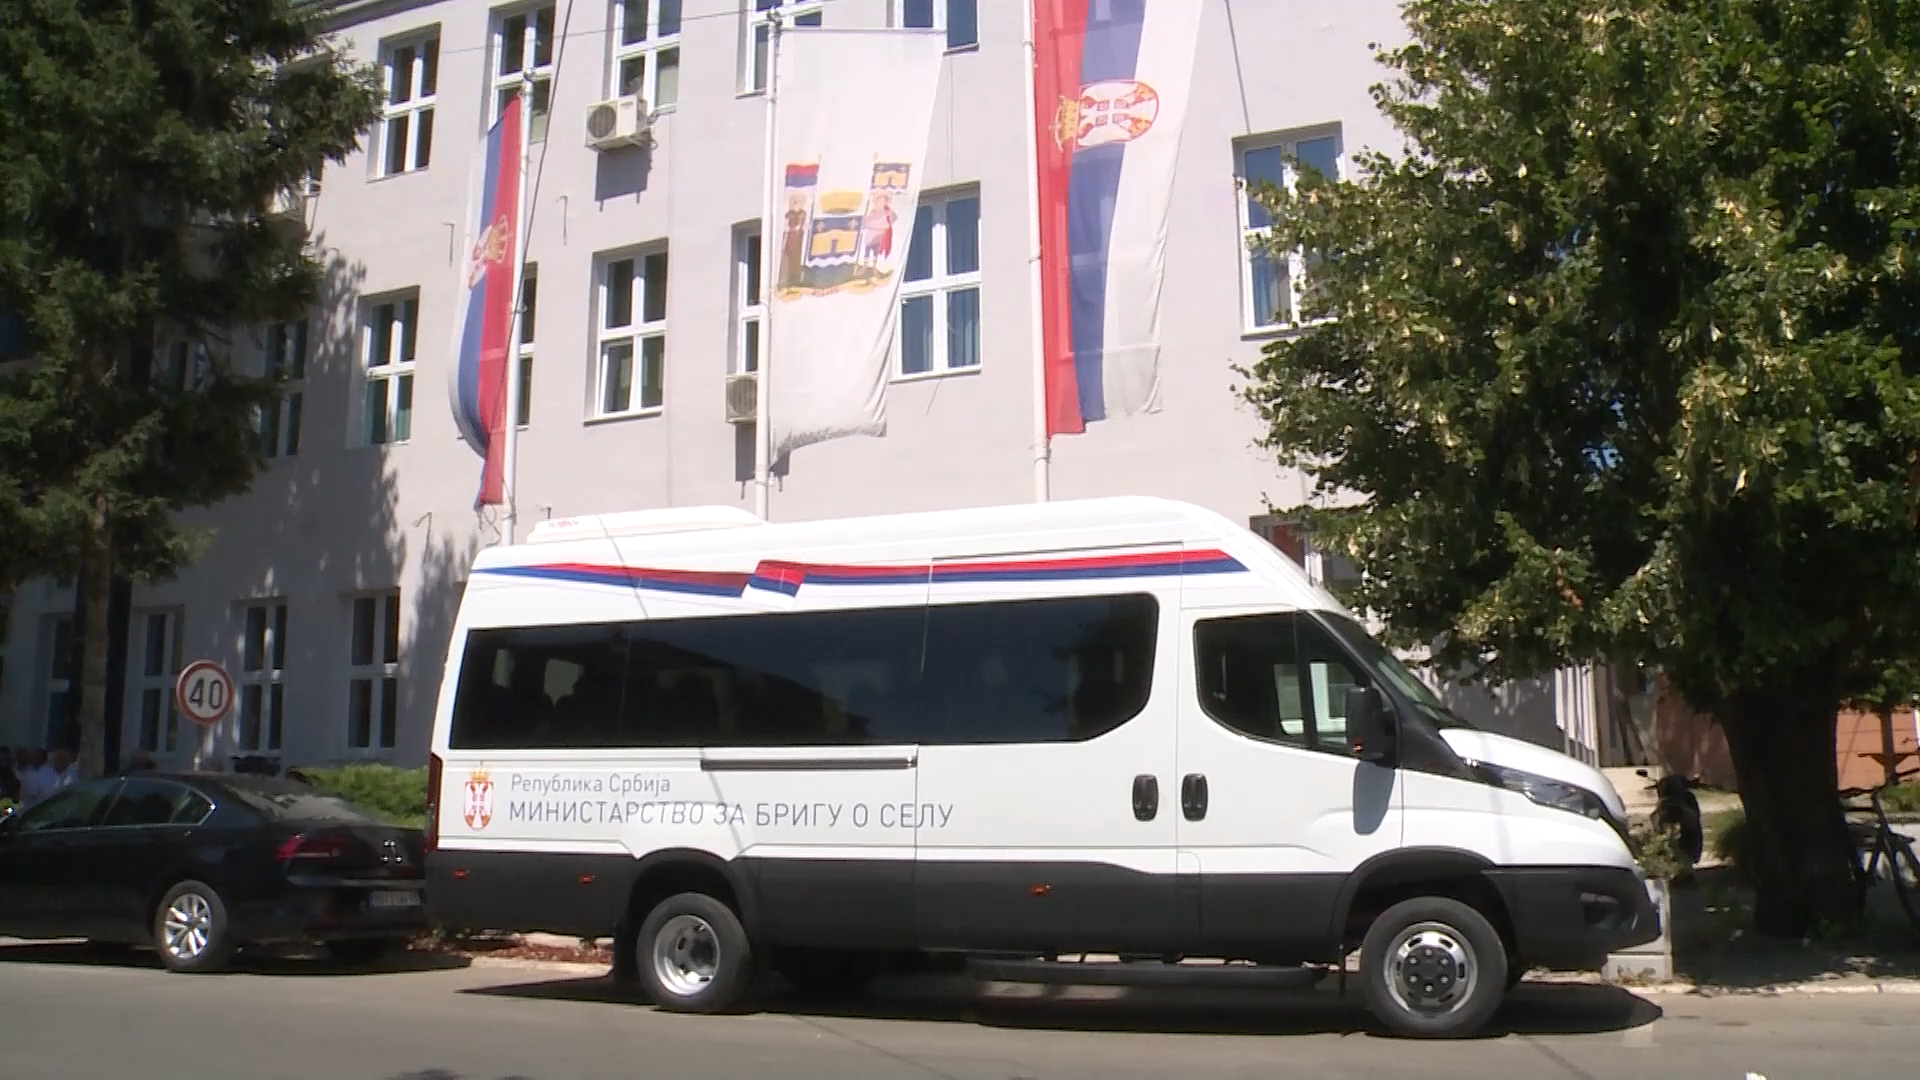 Još 17 sela dobilo minibuseve za besplatan prevoz stanovnika